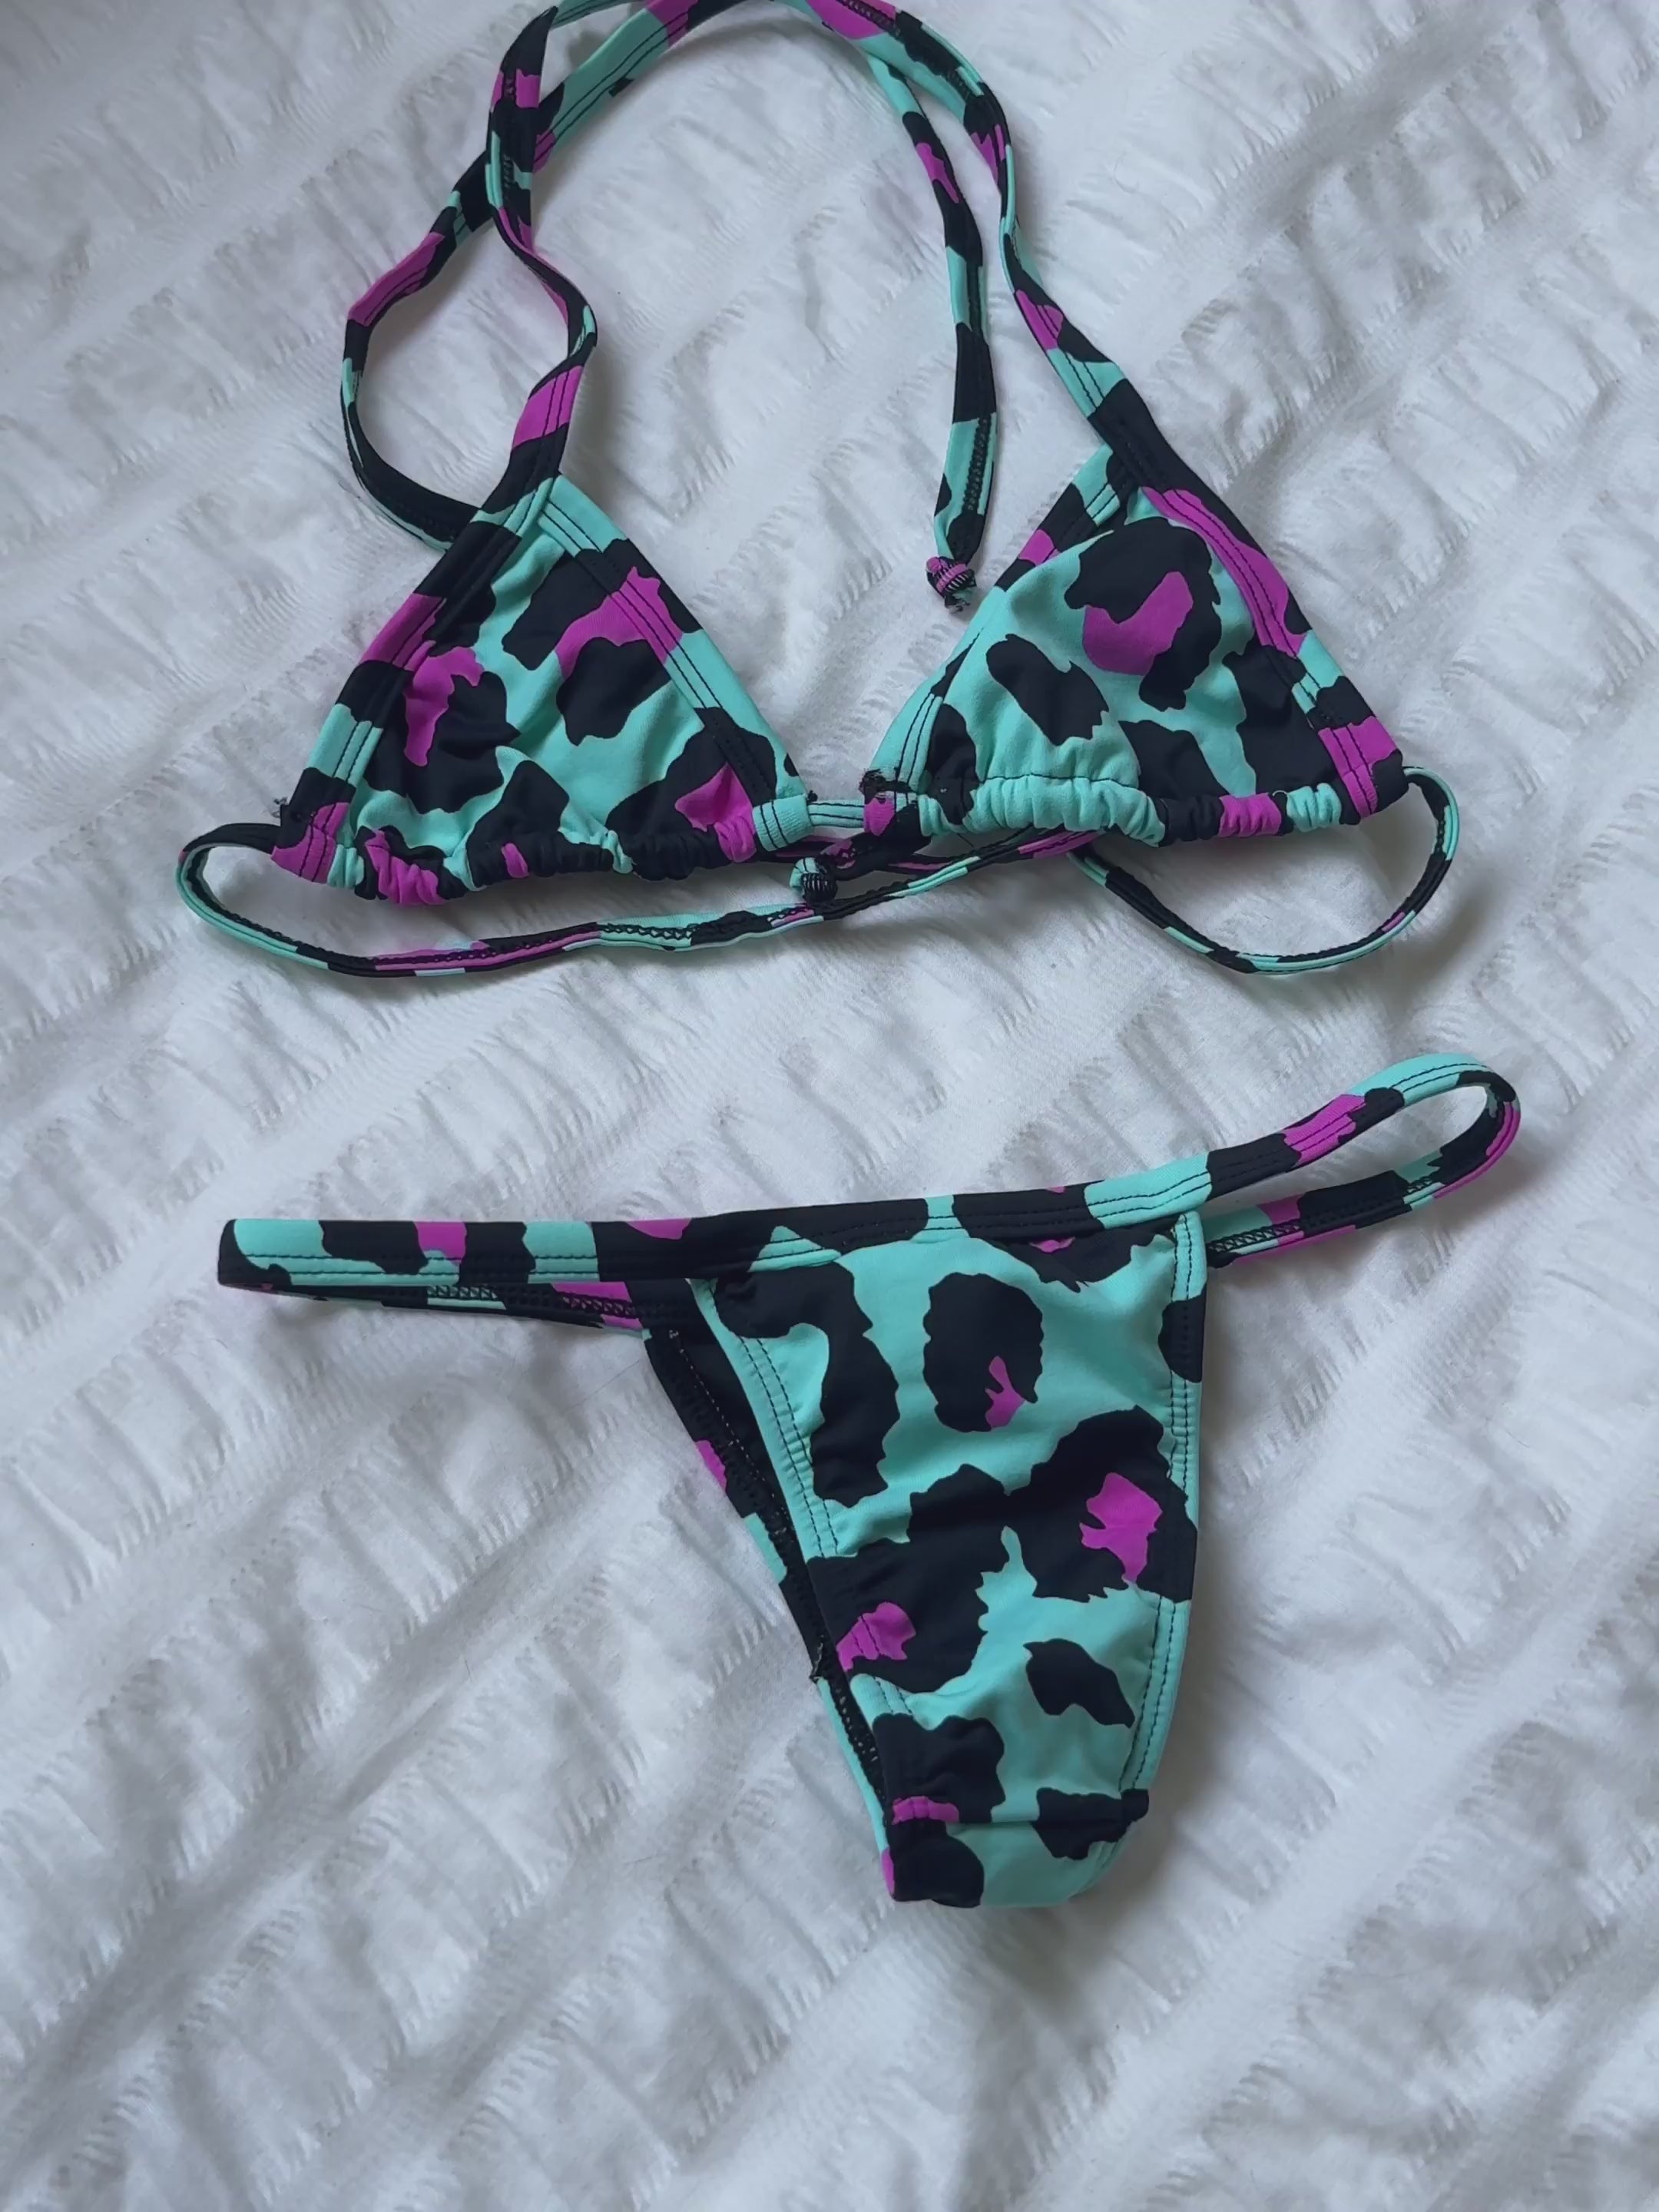 Sol Aqua/Pink/Black Thong Bikini Set - Patterned